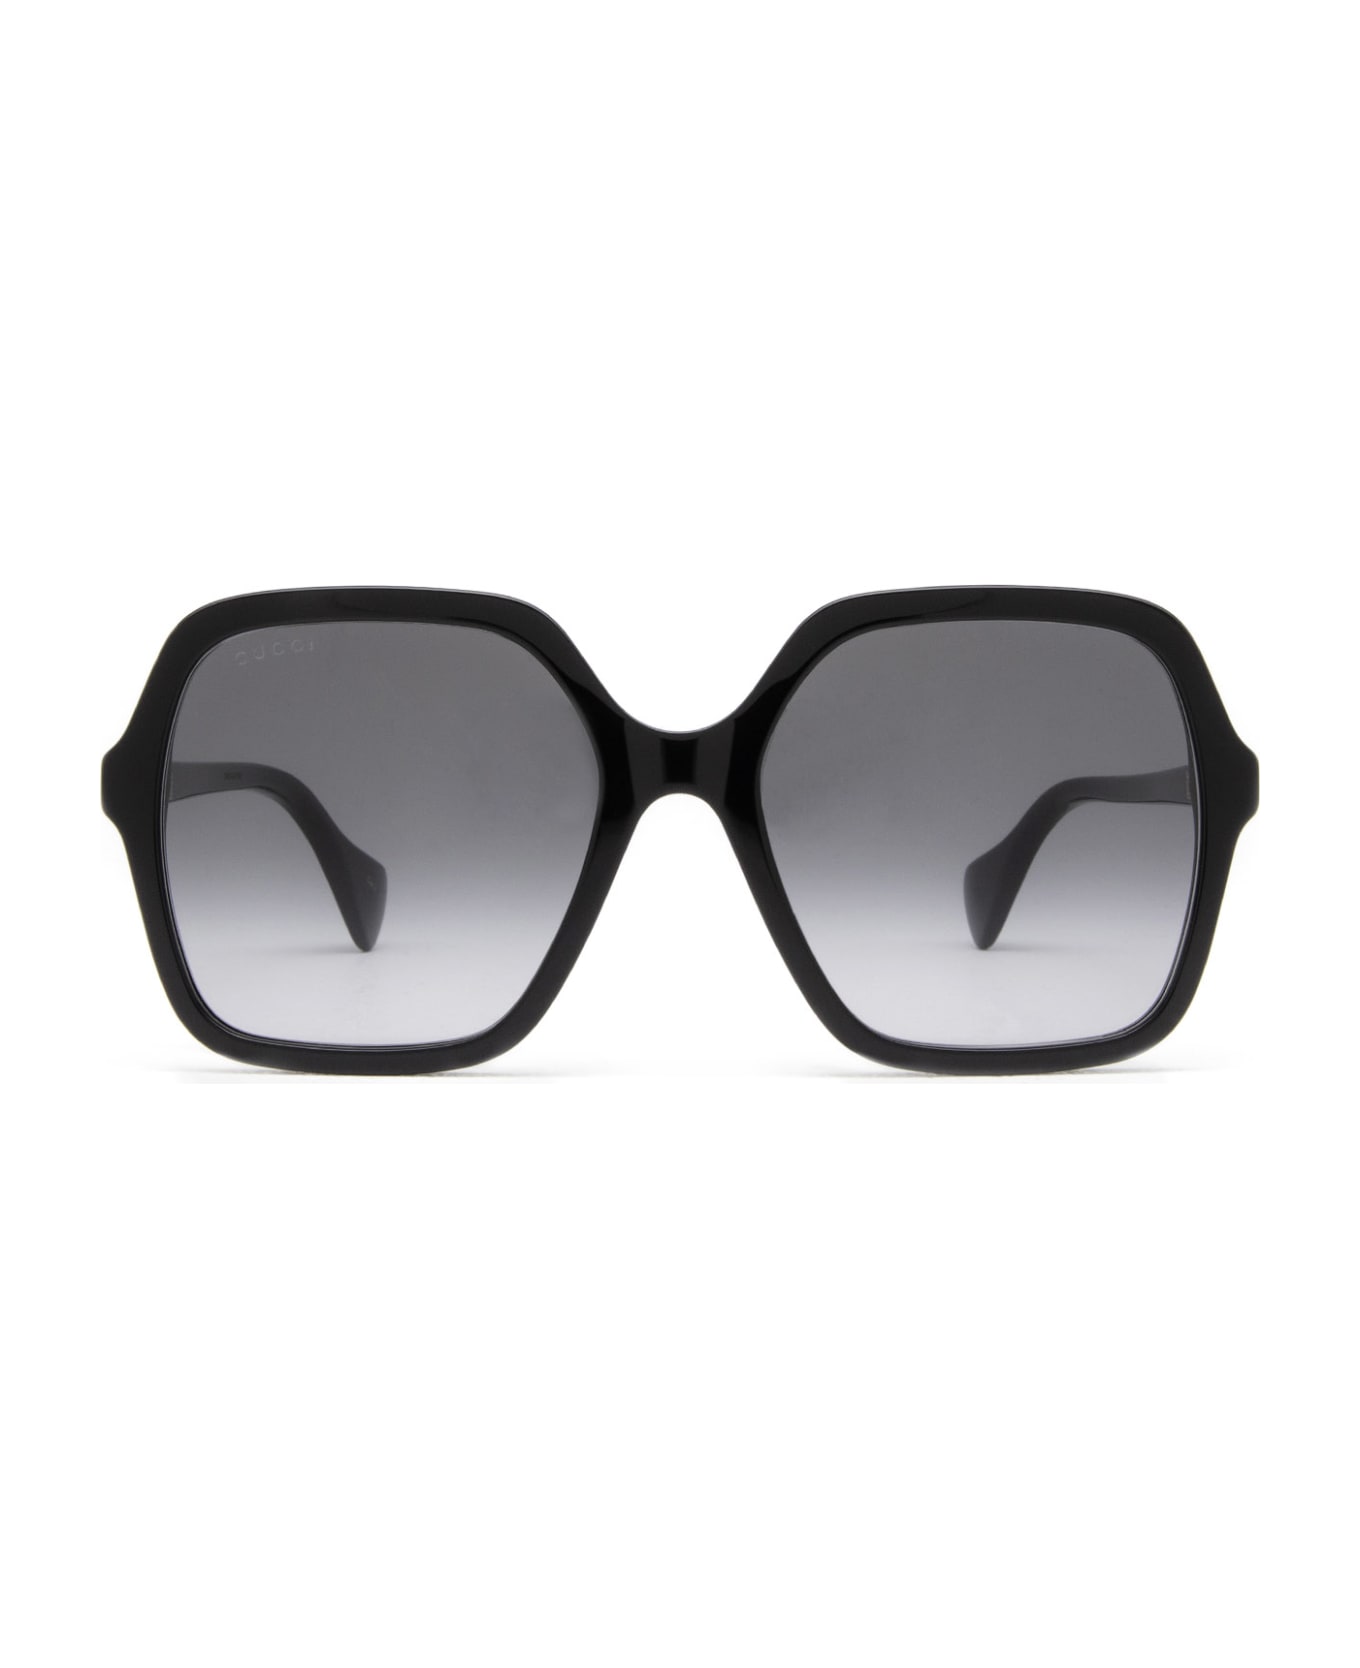 Gucci Eyewear Gg1072s Black Sunglasses - Black